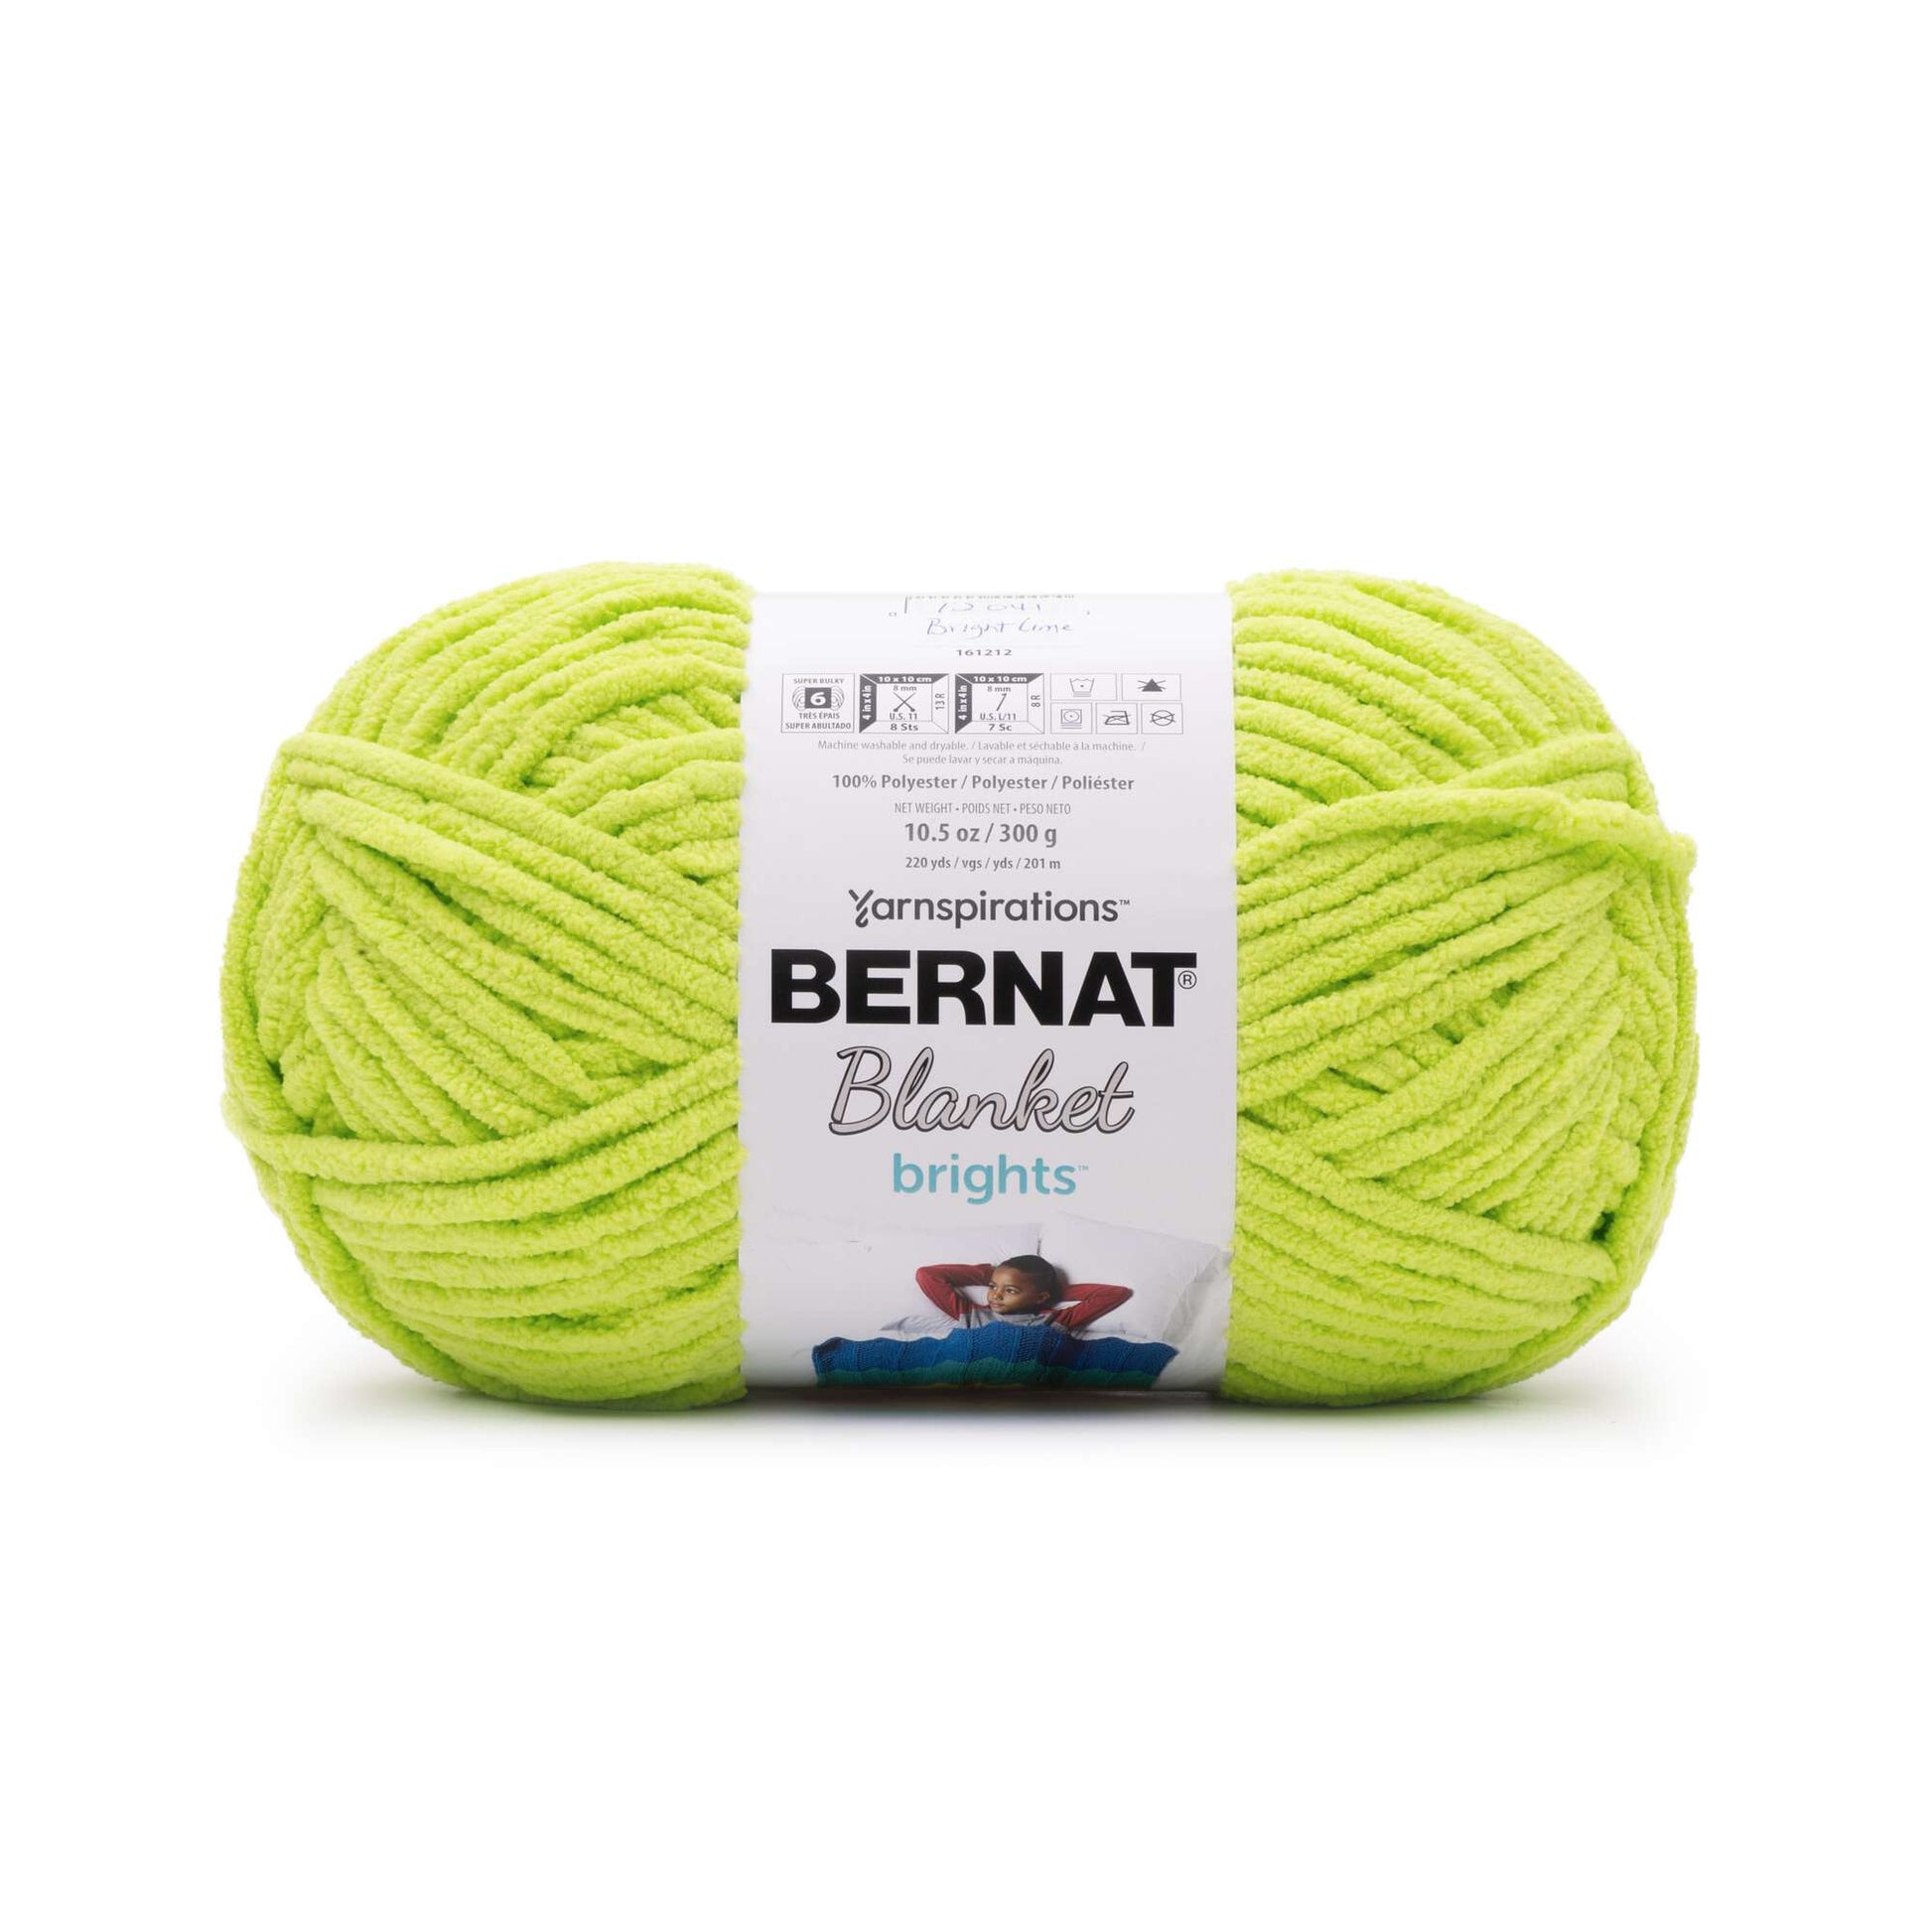 Bernat Blanket Brights Yarn (300g/10.5oz) Bright Lime